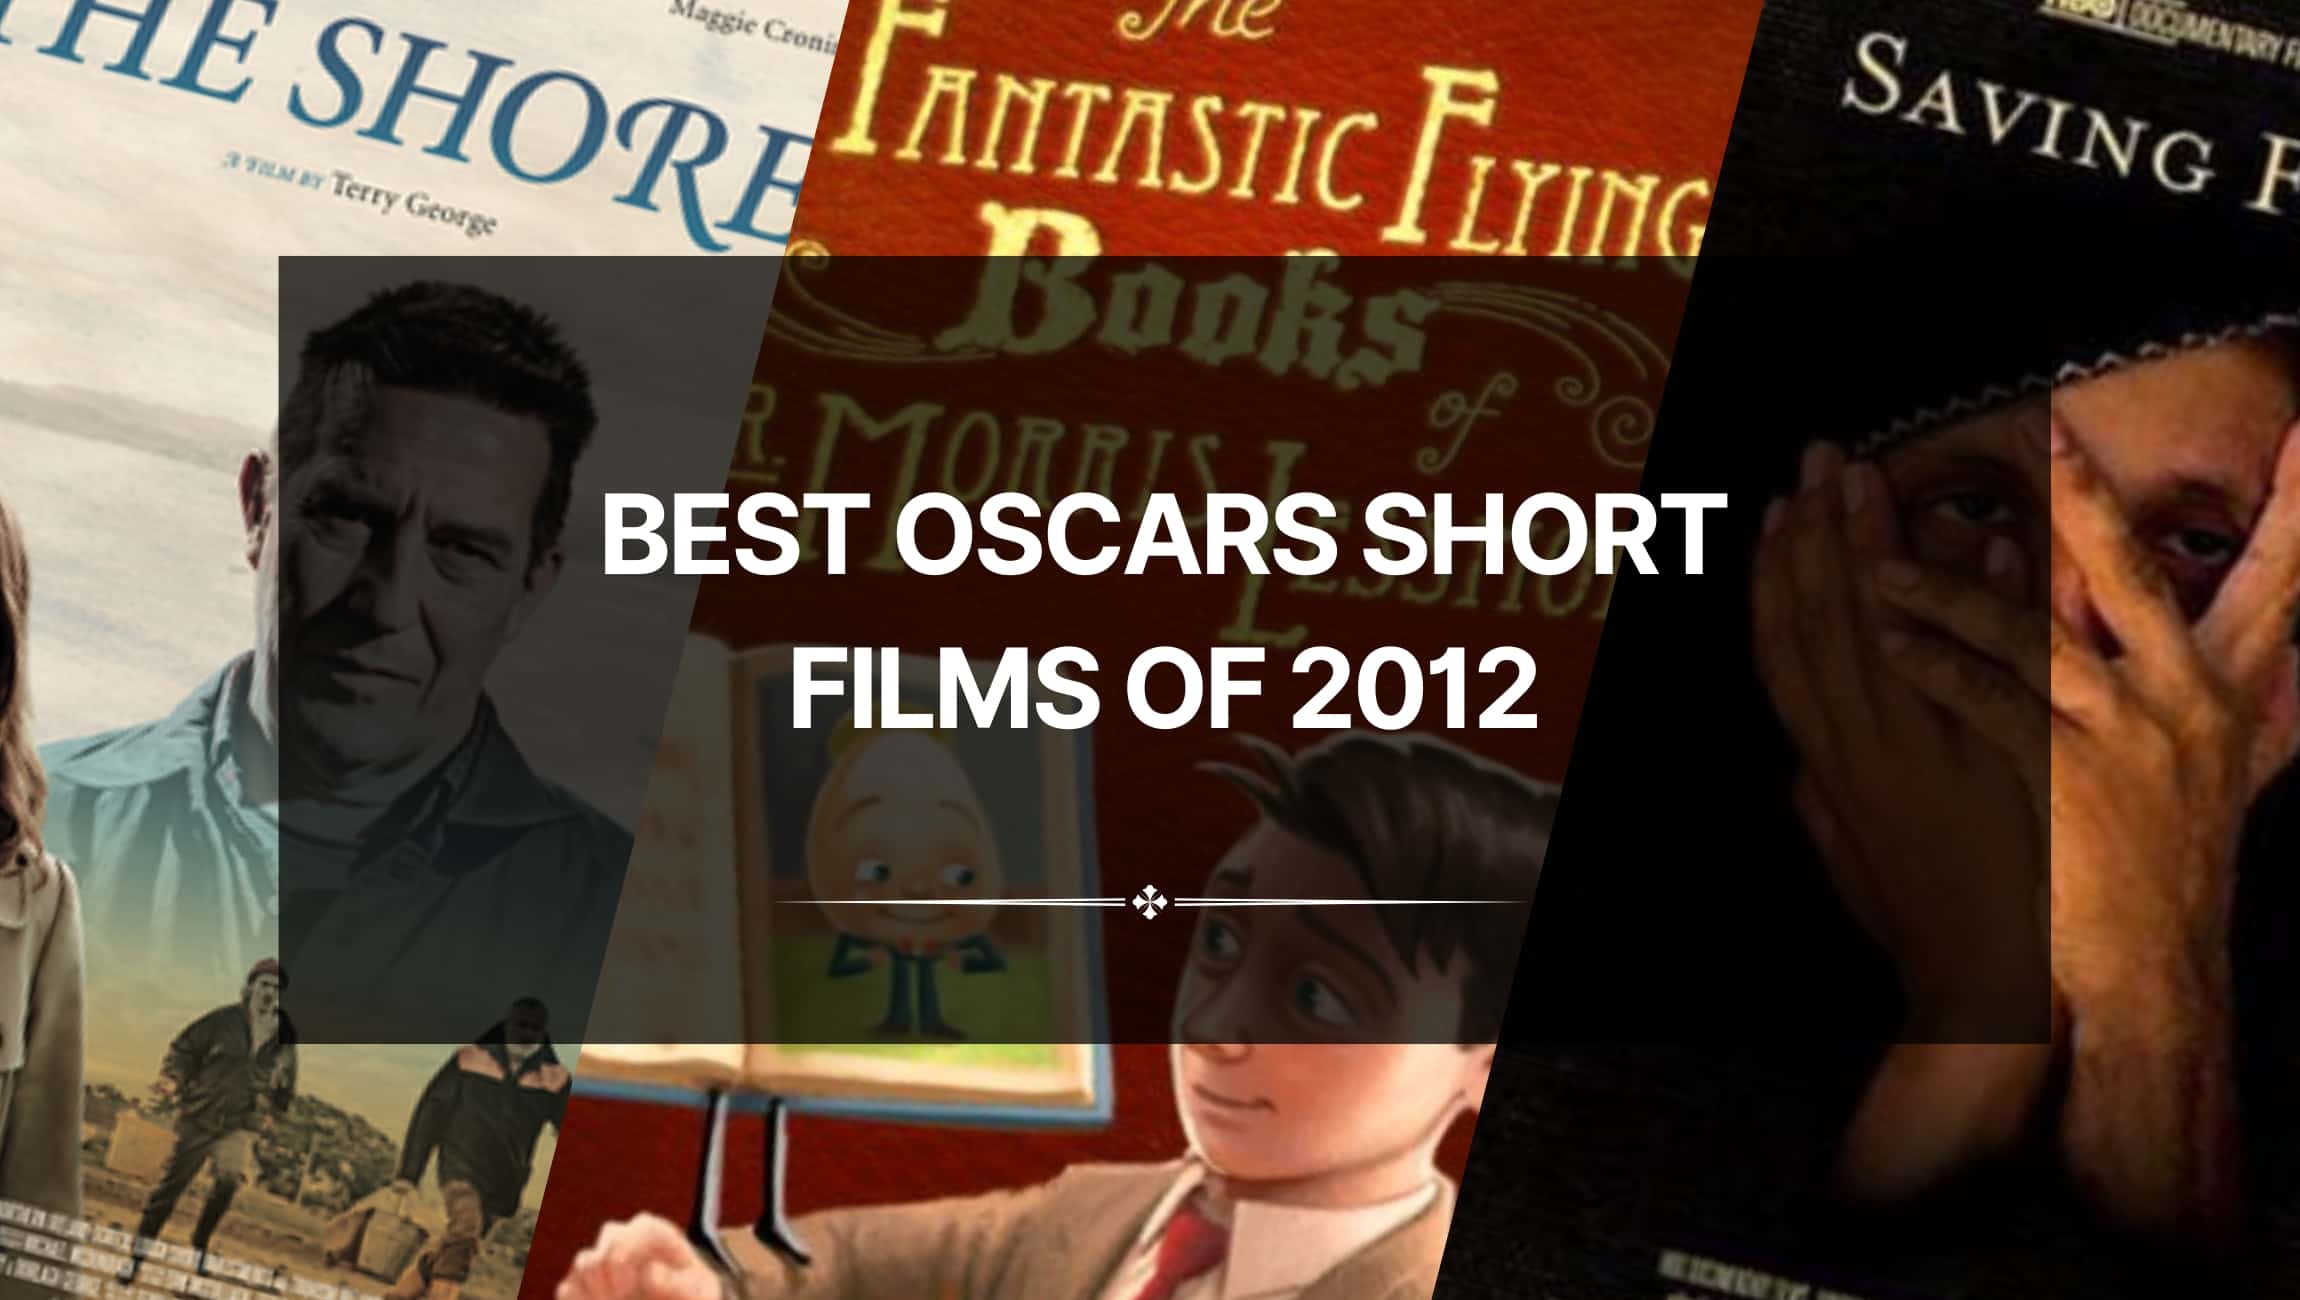 The Best Oscars Short Films of 2012: Astonishing Talent